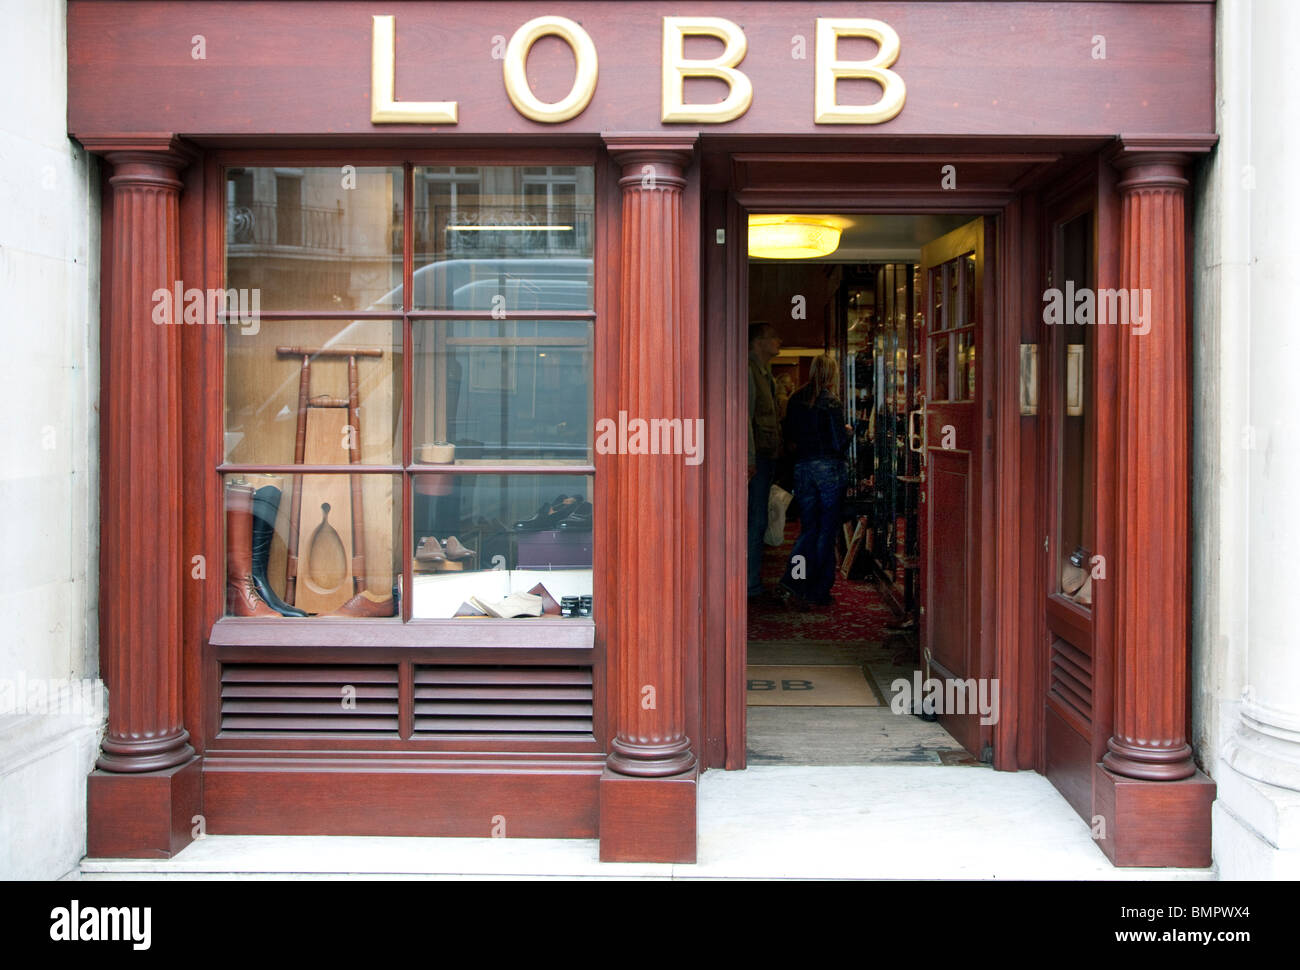 Lobb calzature su misura shop, St James's, Londra Foto Stock